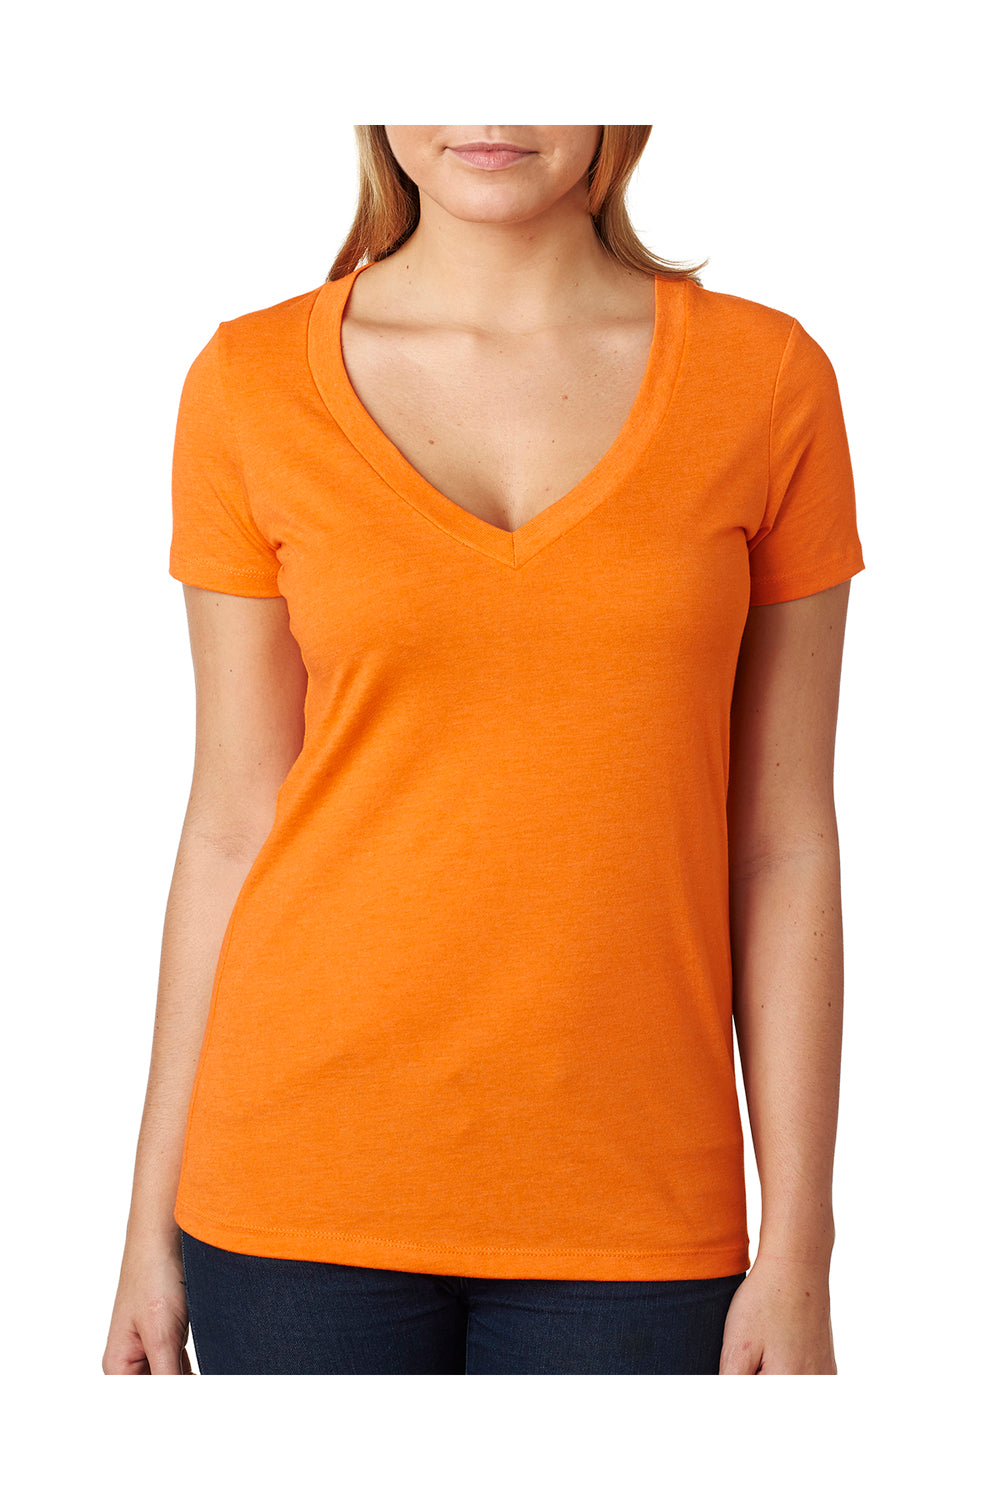 Next Level 6640 Womens CVC Jersey Short Sleeve V-Neck T-Shirt Orange Front